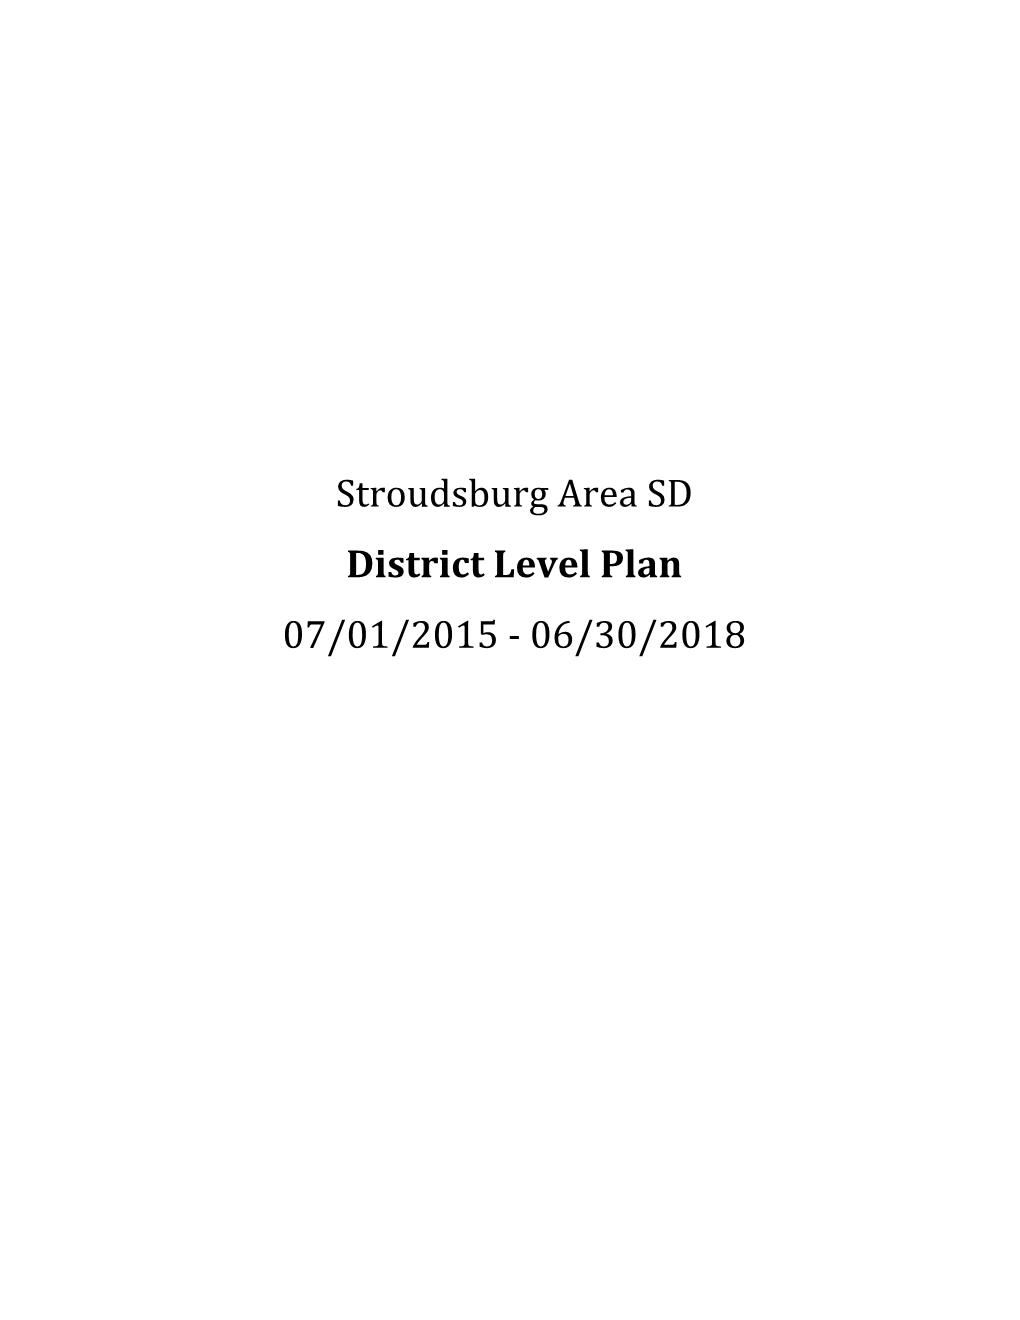 Stroudsburg Area SD District Level Plan 07/01/2015 ‐ 06/30/2018 2